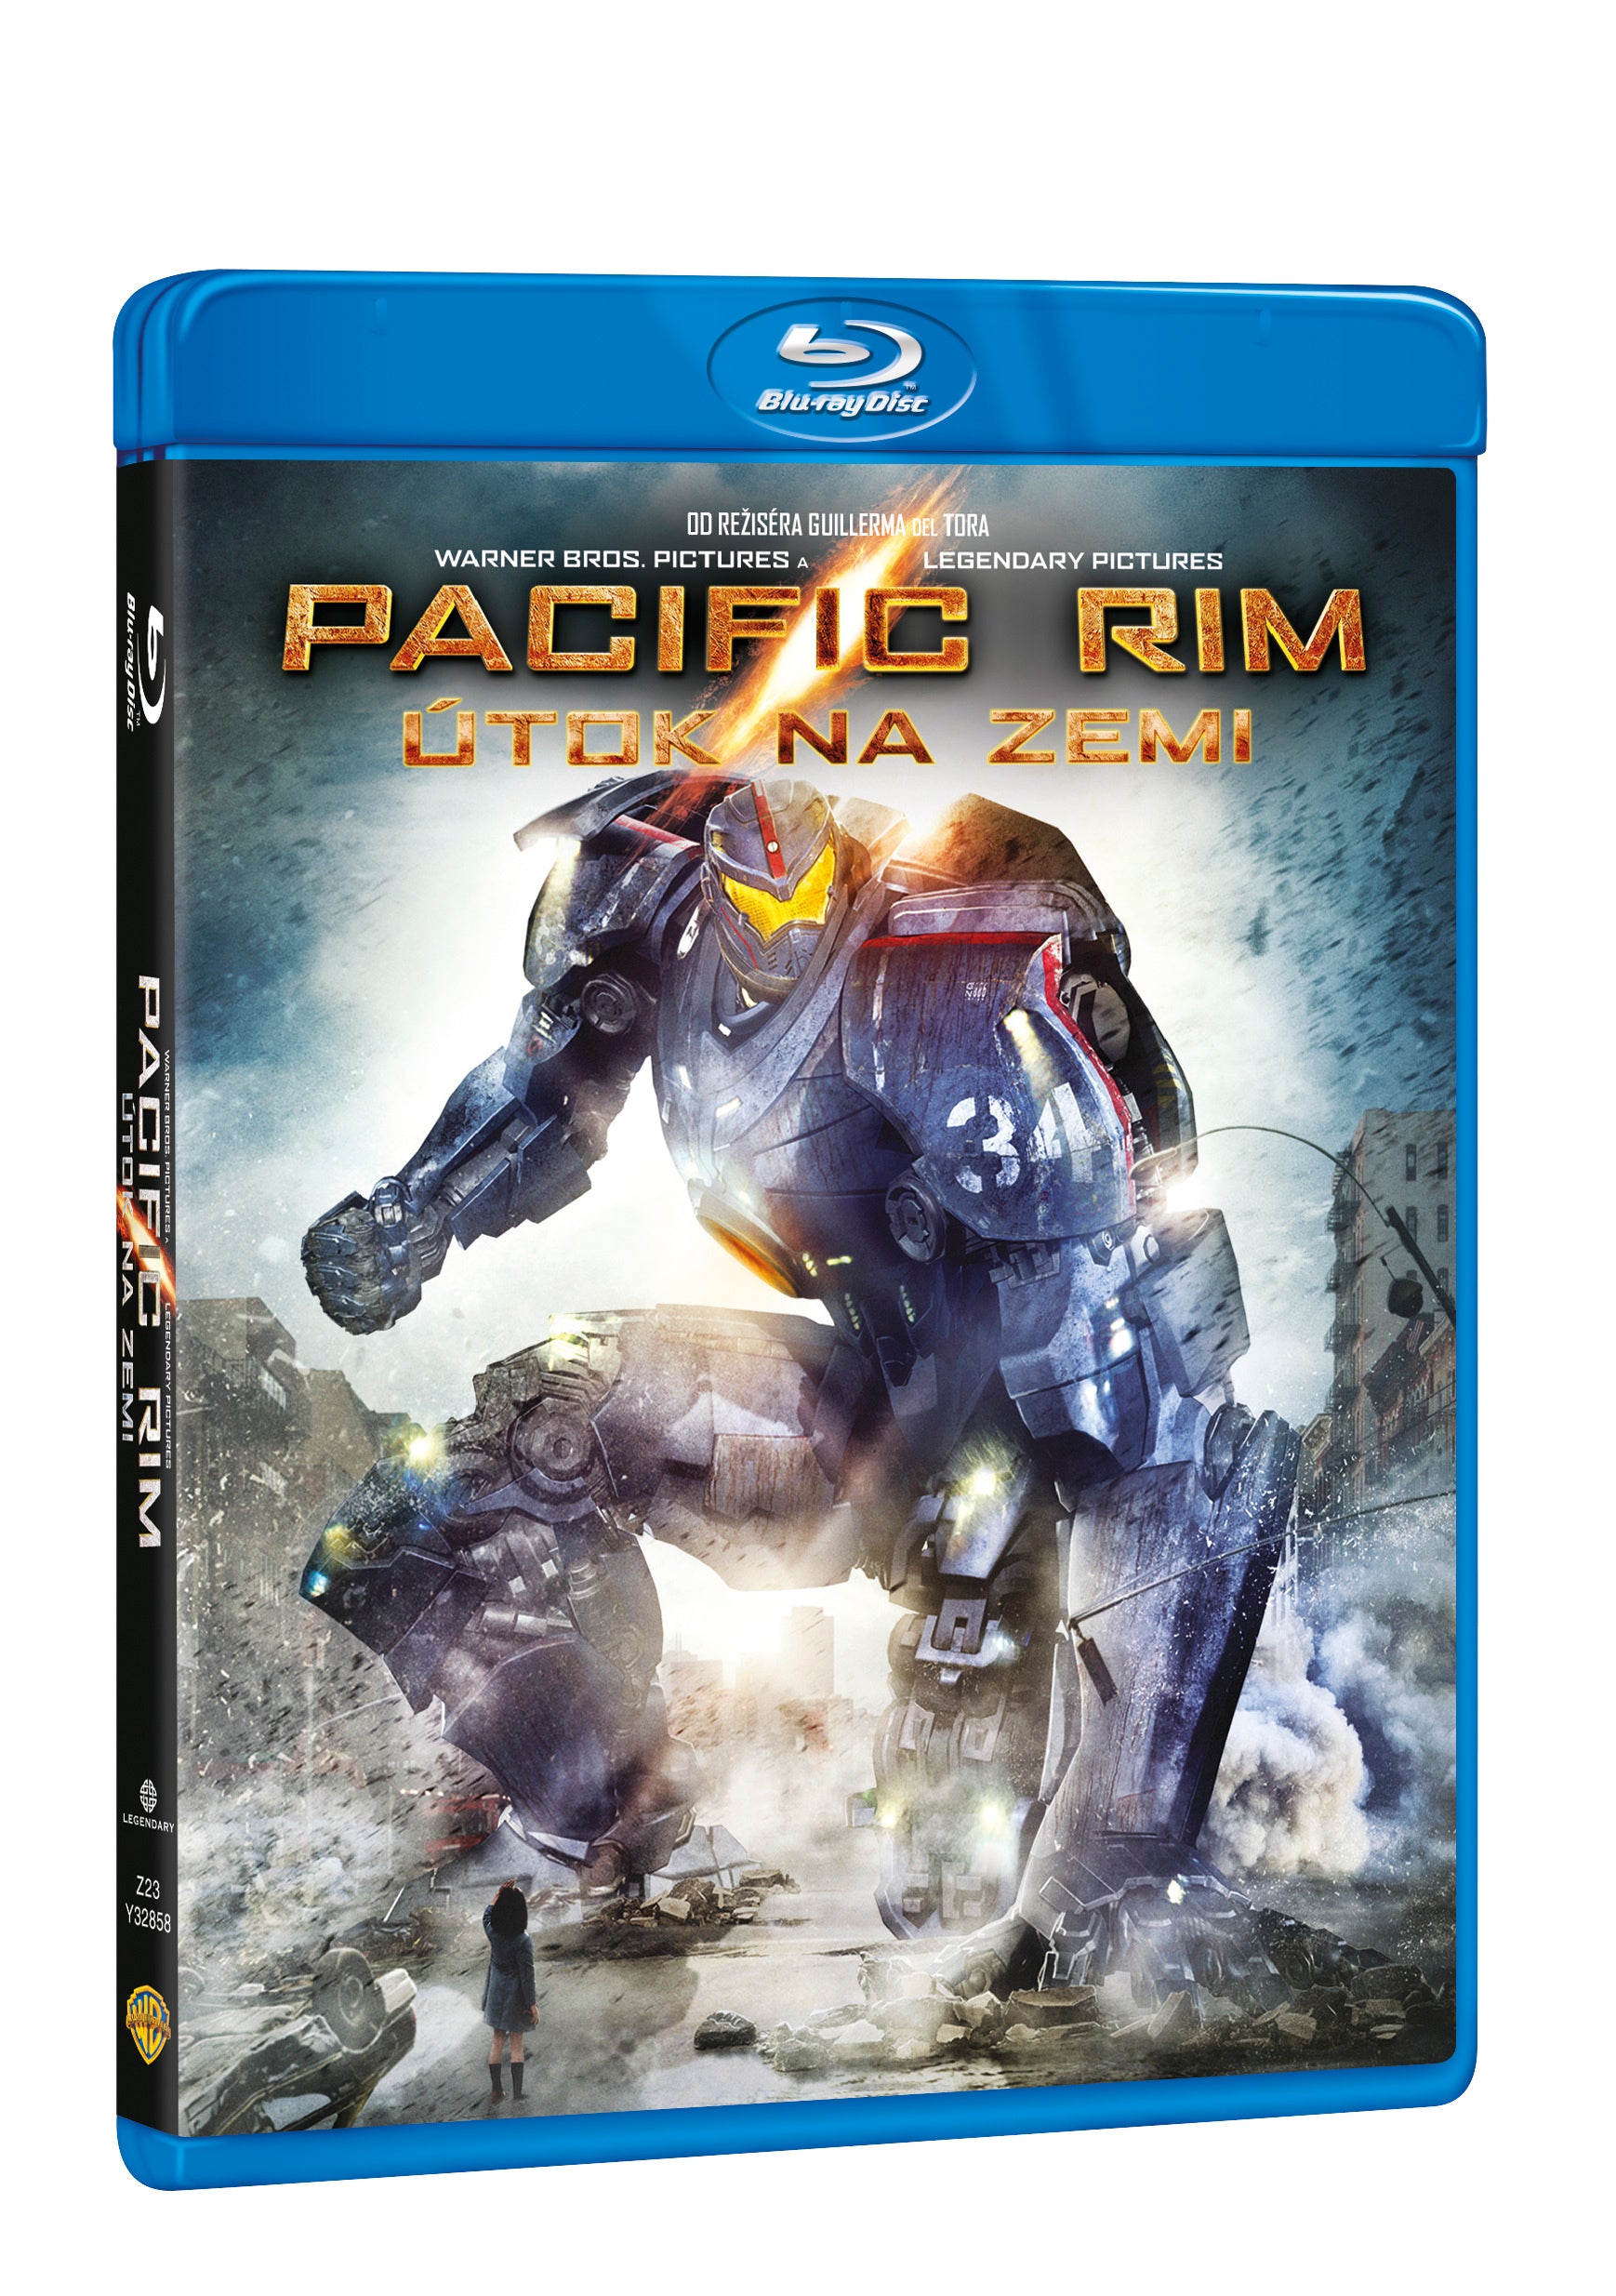 Pacific Rim - Utok na Zemi BD / Pacific Rim - Czech version